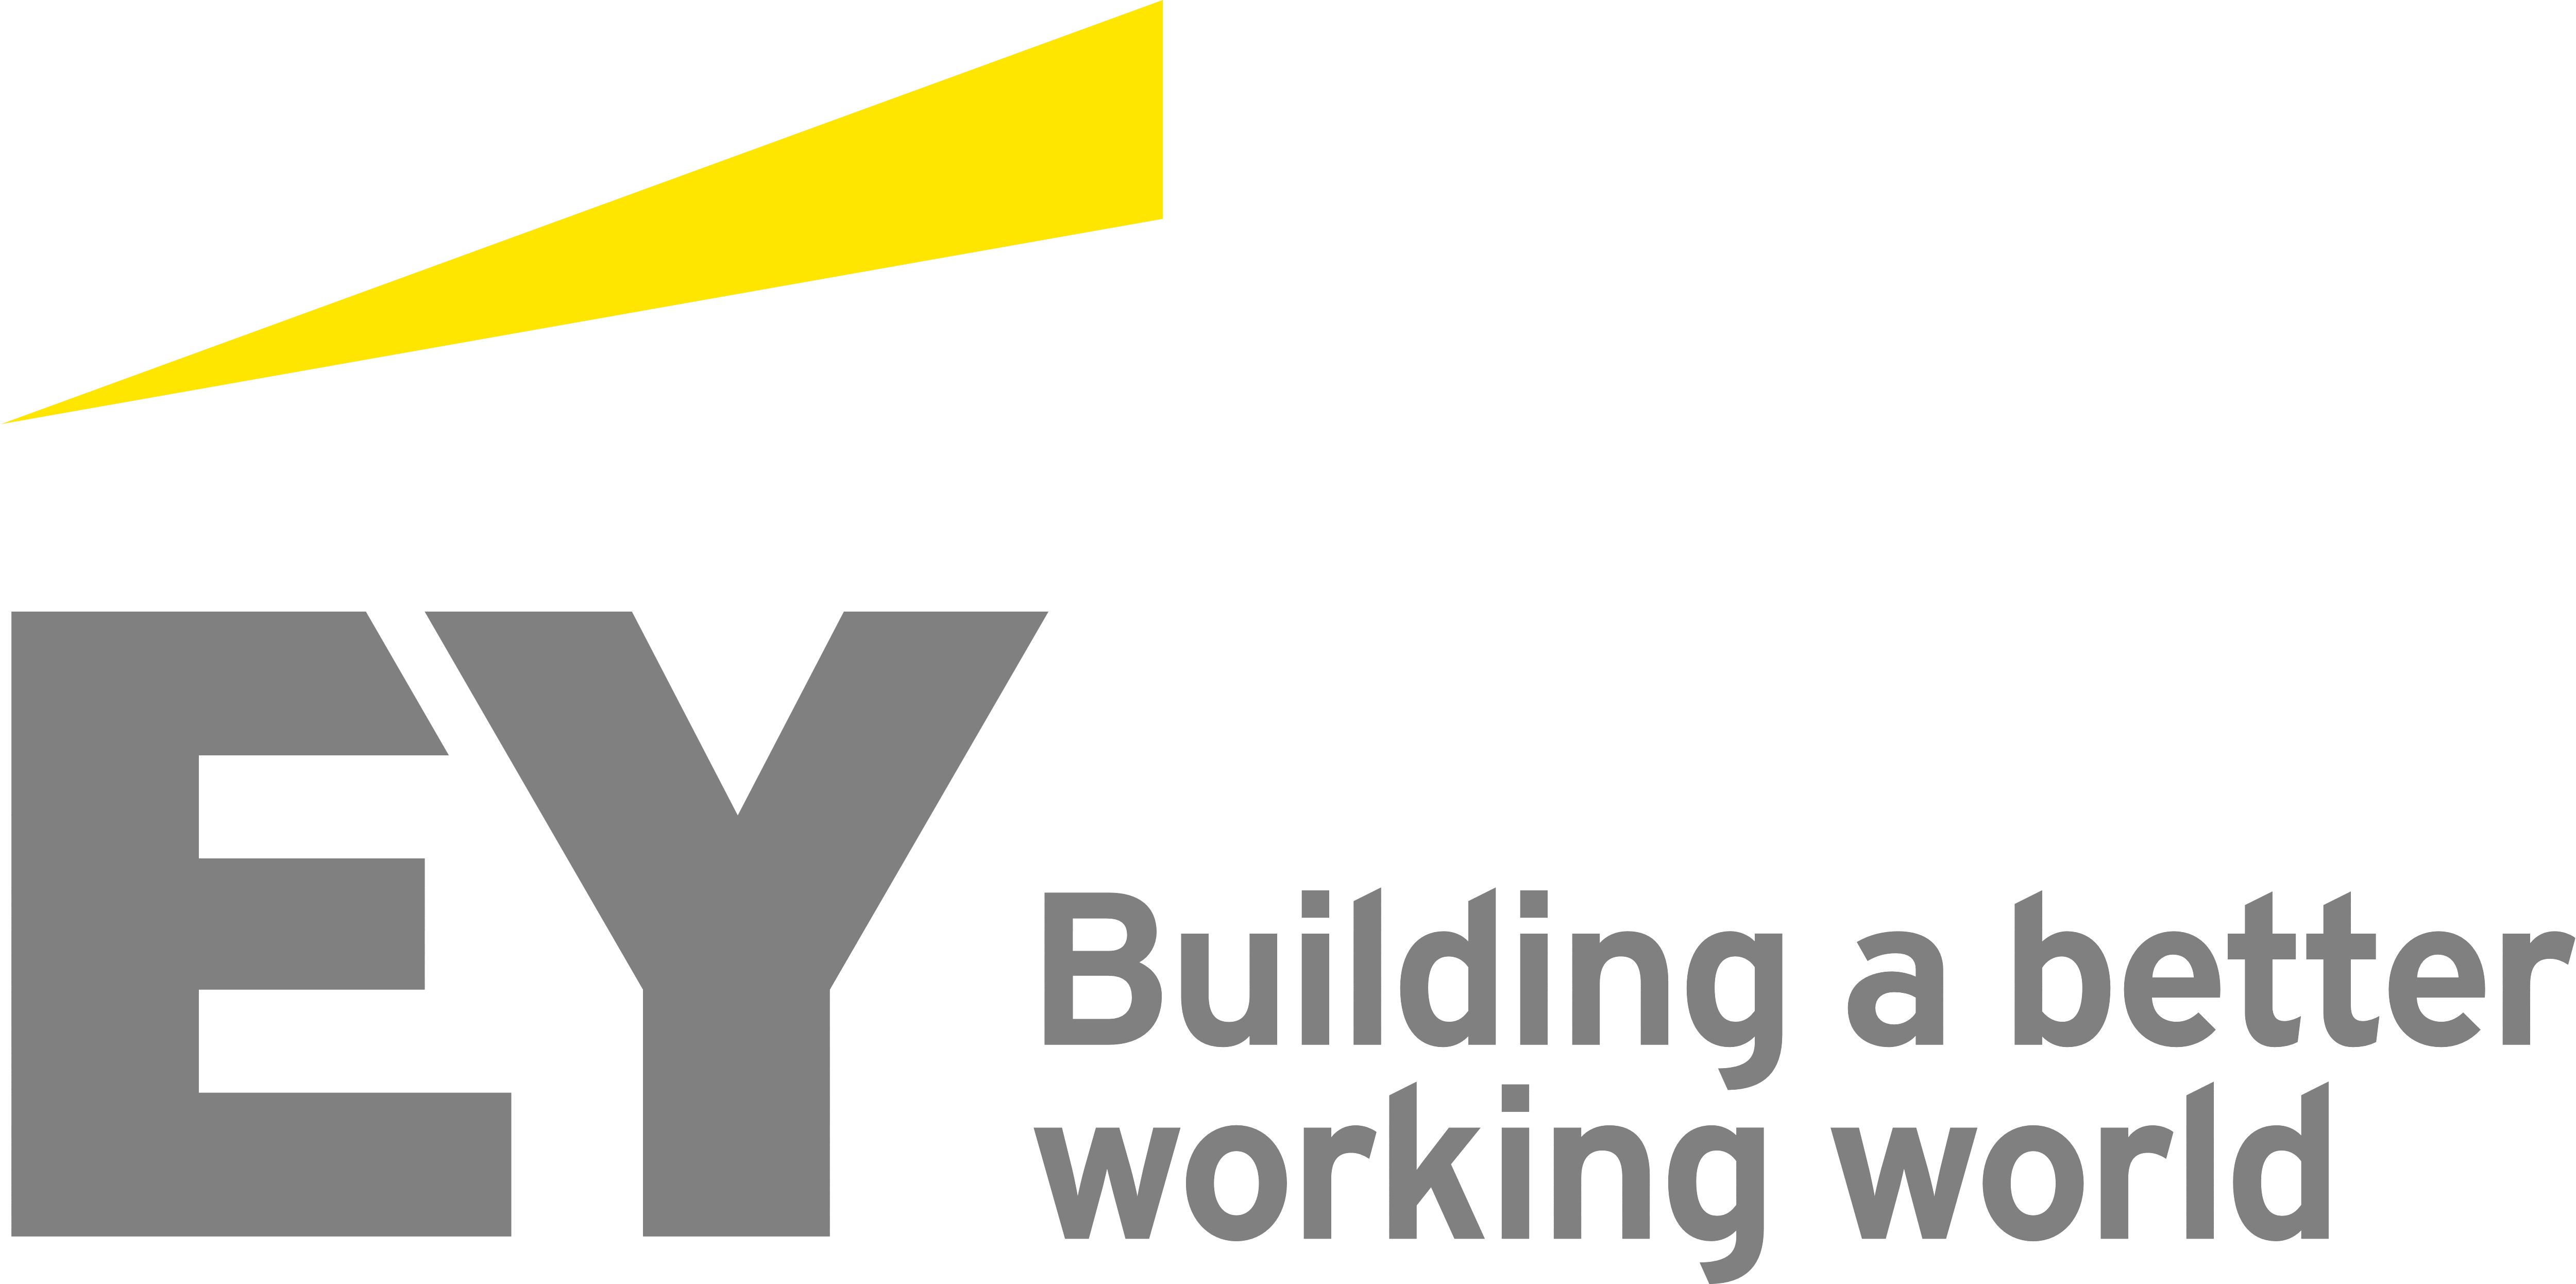 EY logo slogan